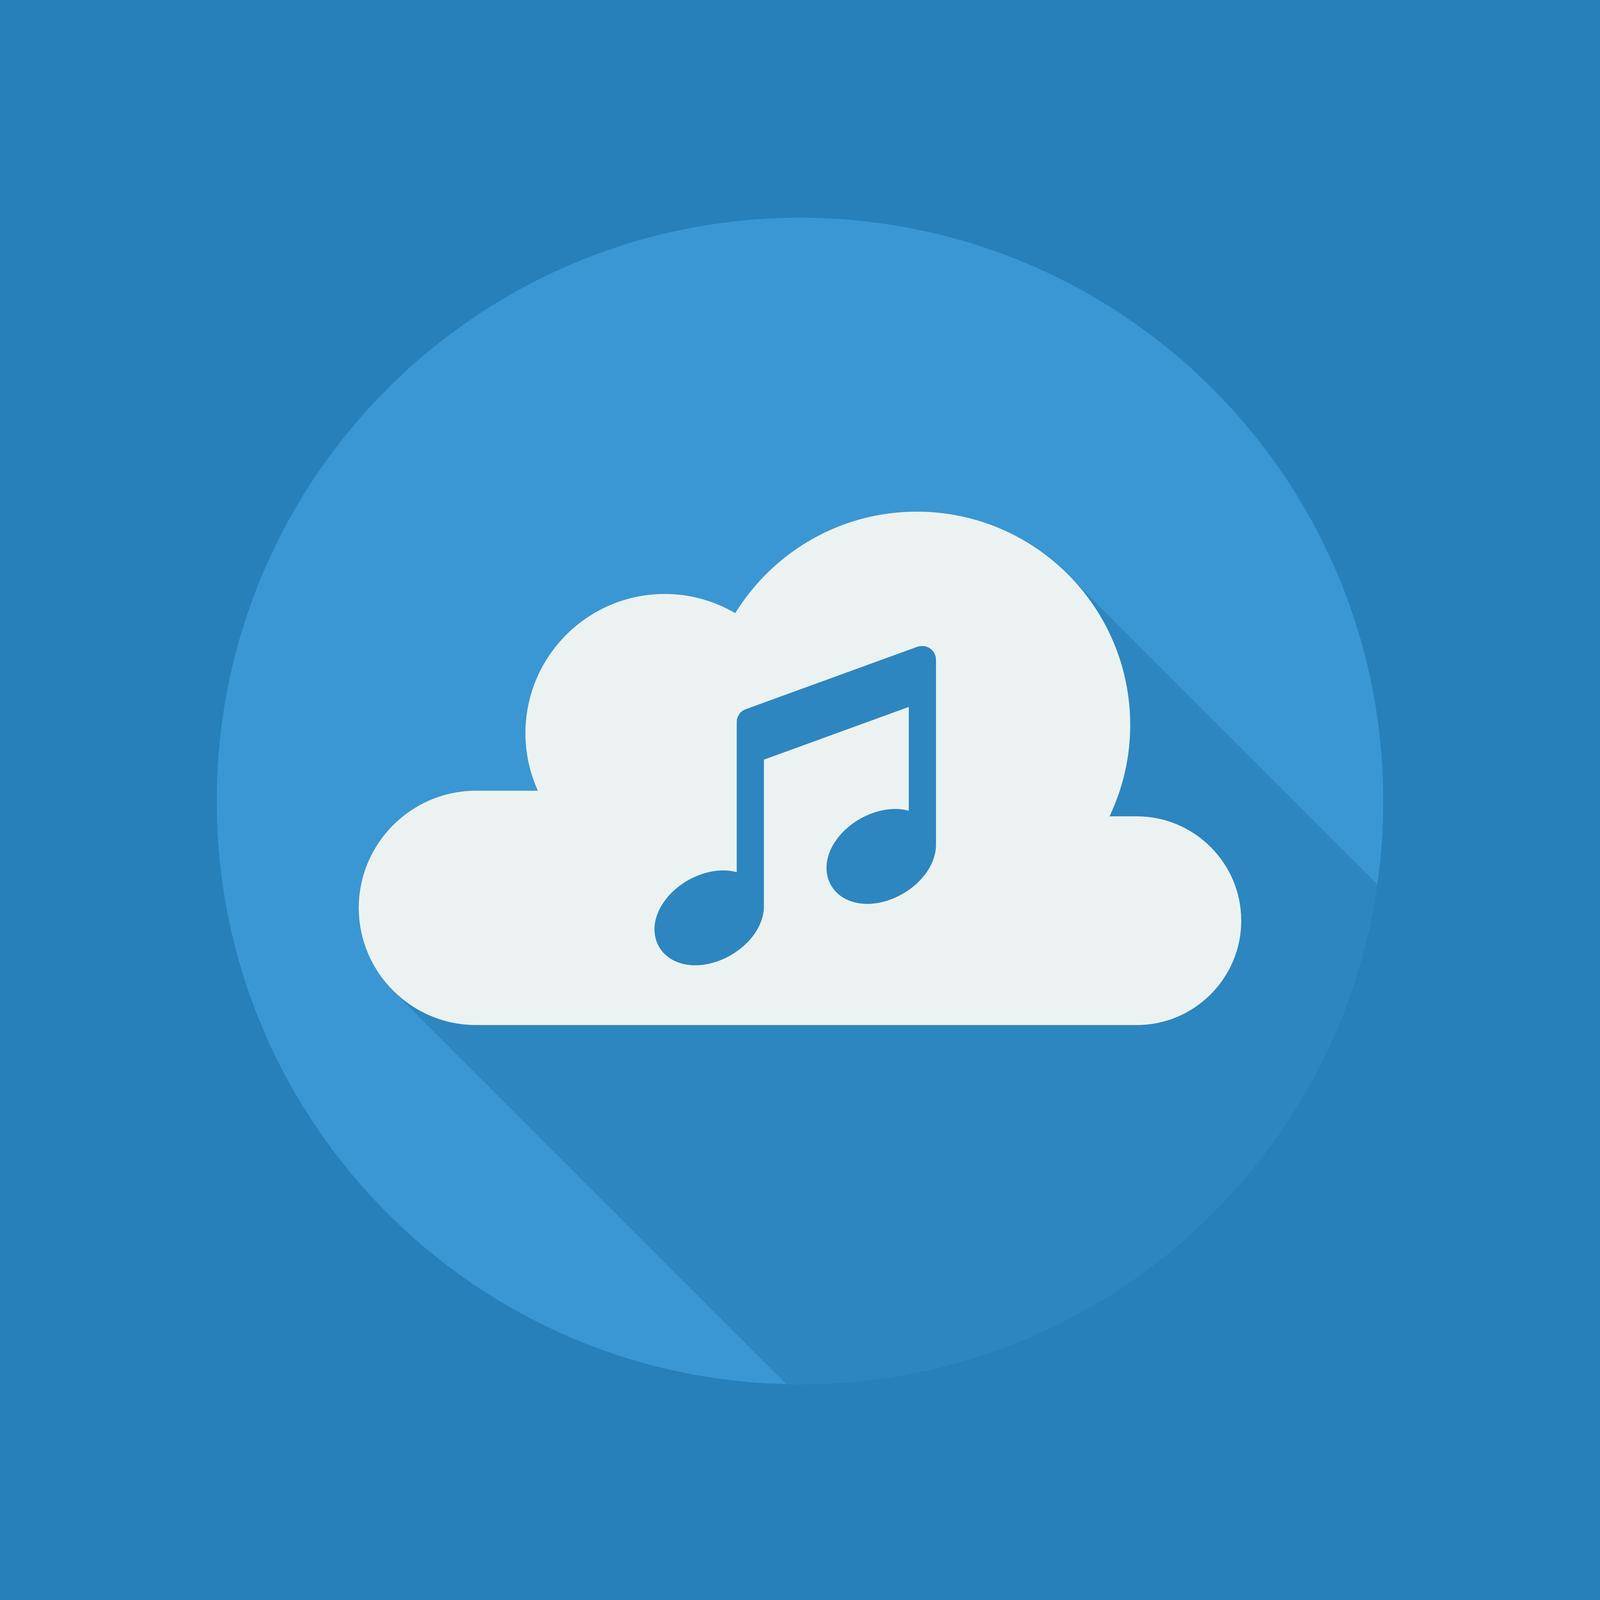 Cloud Computing Flat Icon With Long Shadow. Music